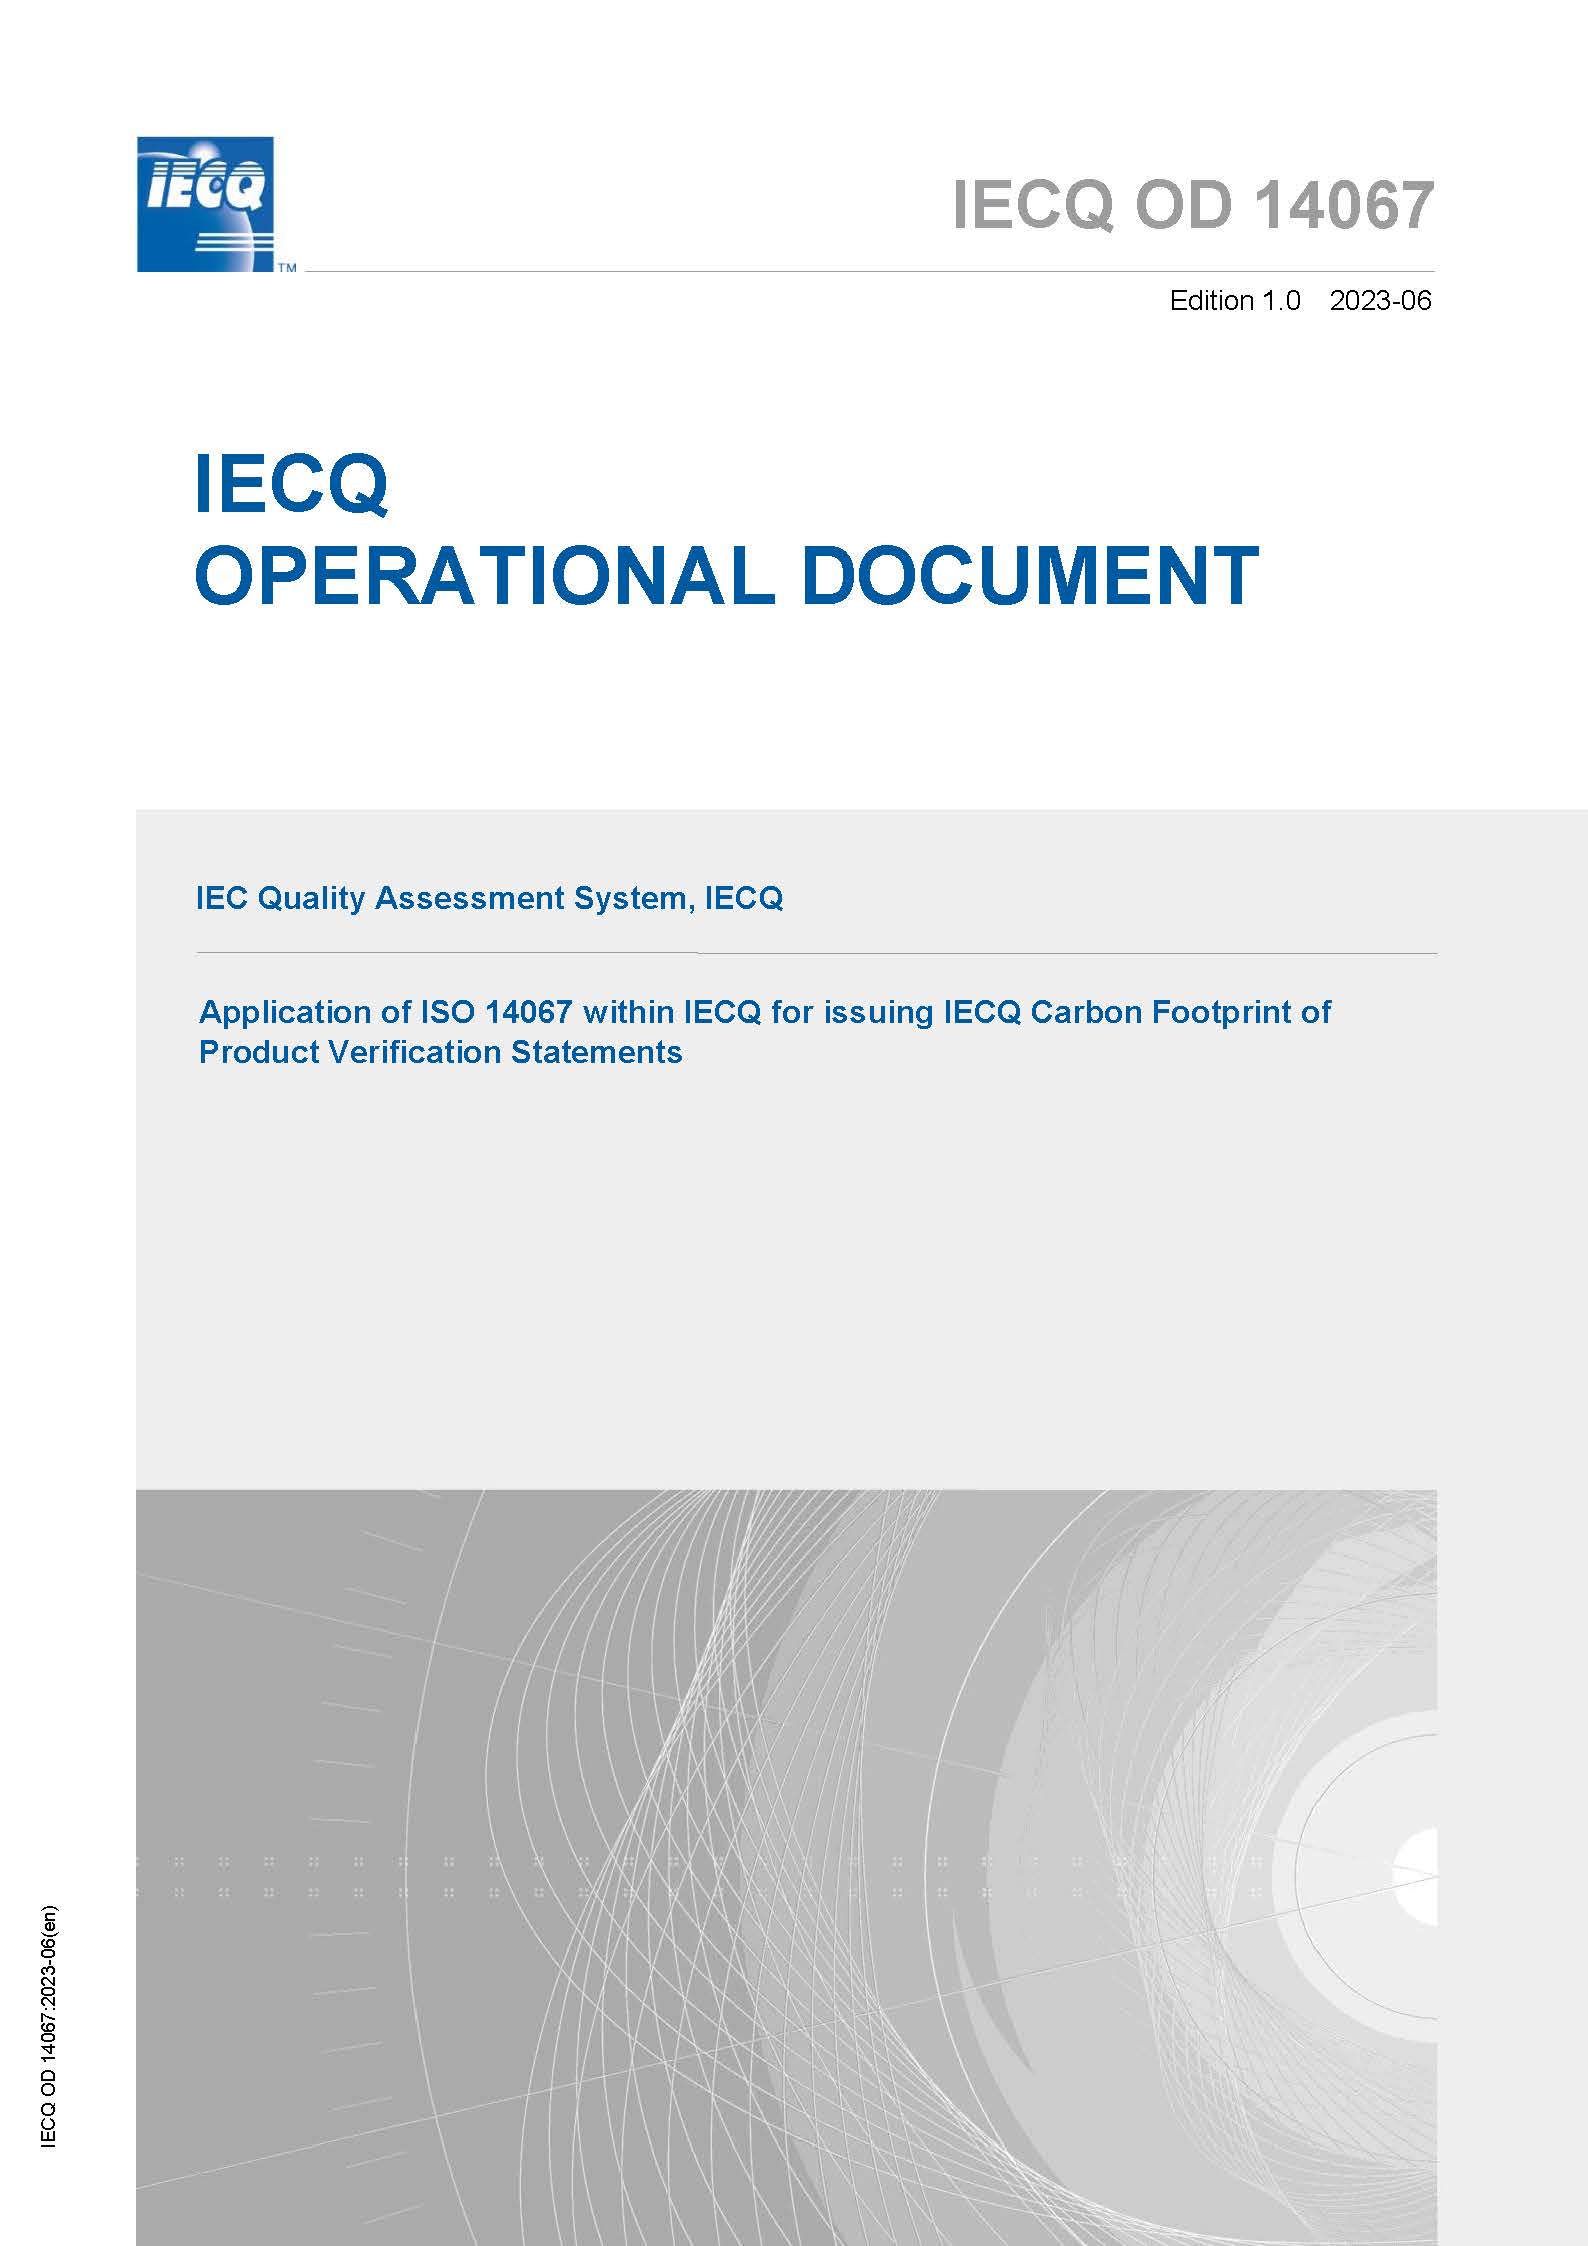 IECQ Rules of Procedure - Part 3-8: IECQ Scheme for LED Component Products